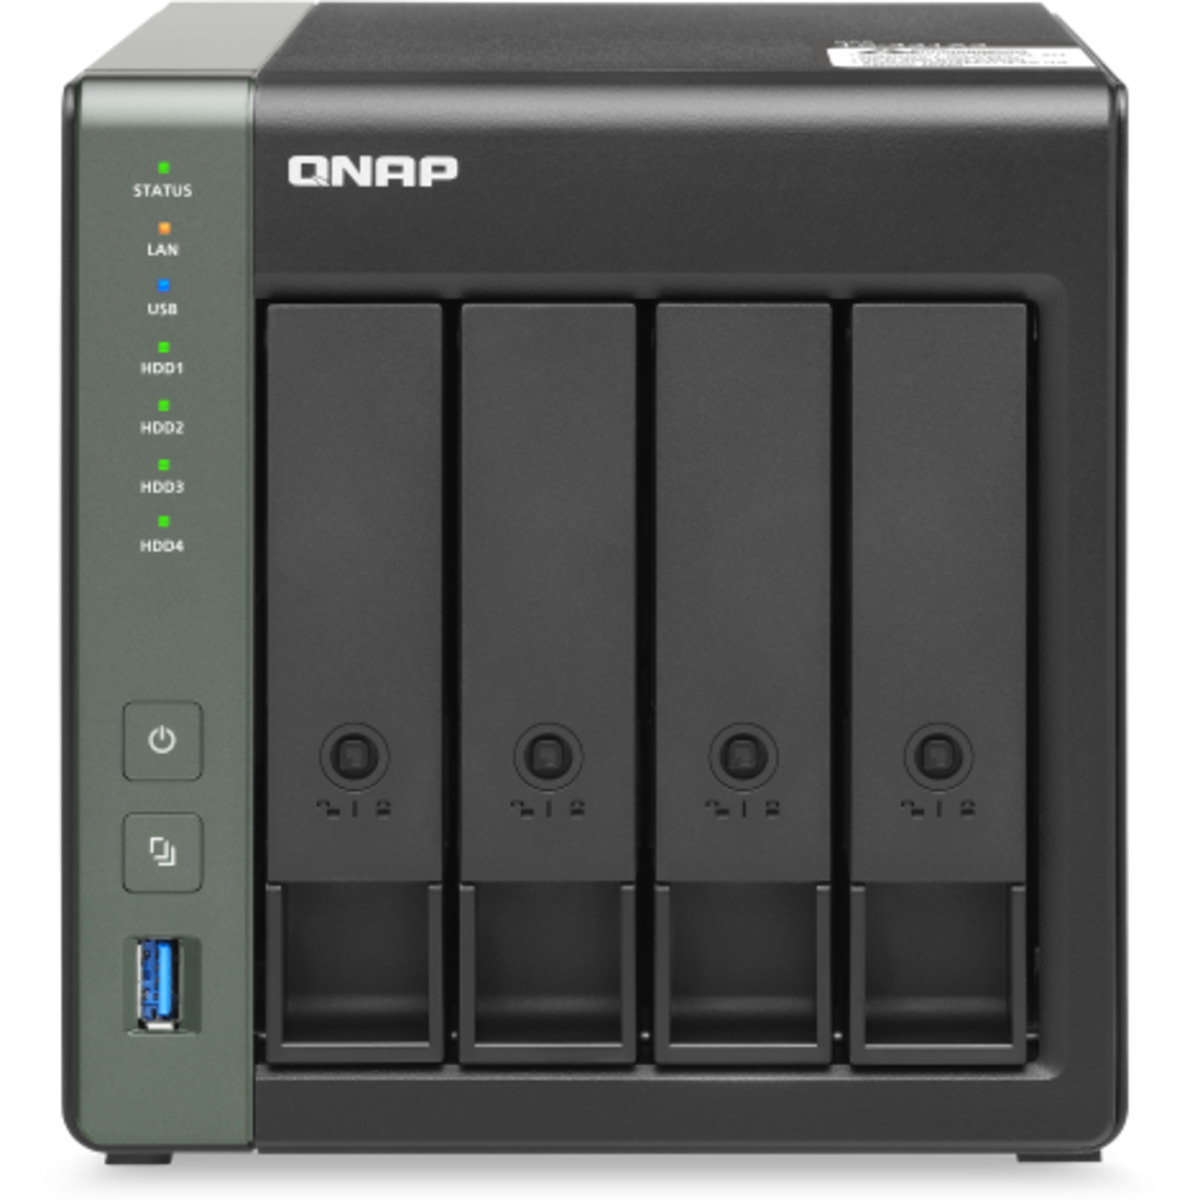 QNAP TS-431X3 16tb 4-Bay Desktop Multimedia / Power User / Business NAS - Network Attached Storage Device 2x8tb Western Digital Gold WD8004FRYZ 3.5 7200rpm SATA 6Gb/s HDD ENTERPRISE Class Drives Installed - Burn-In Tested - FREE RAM UPGRADE TS-431X3